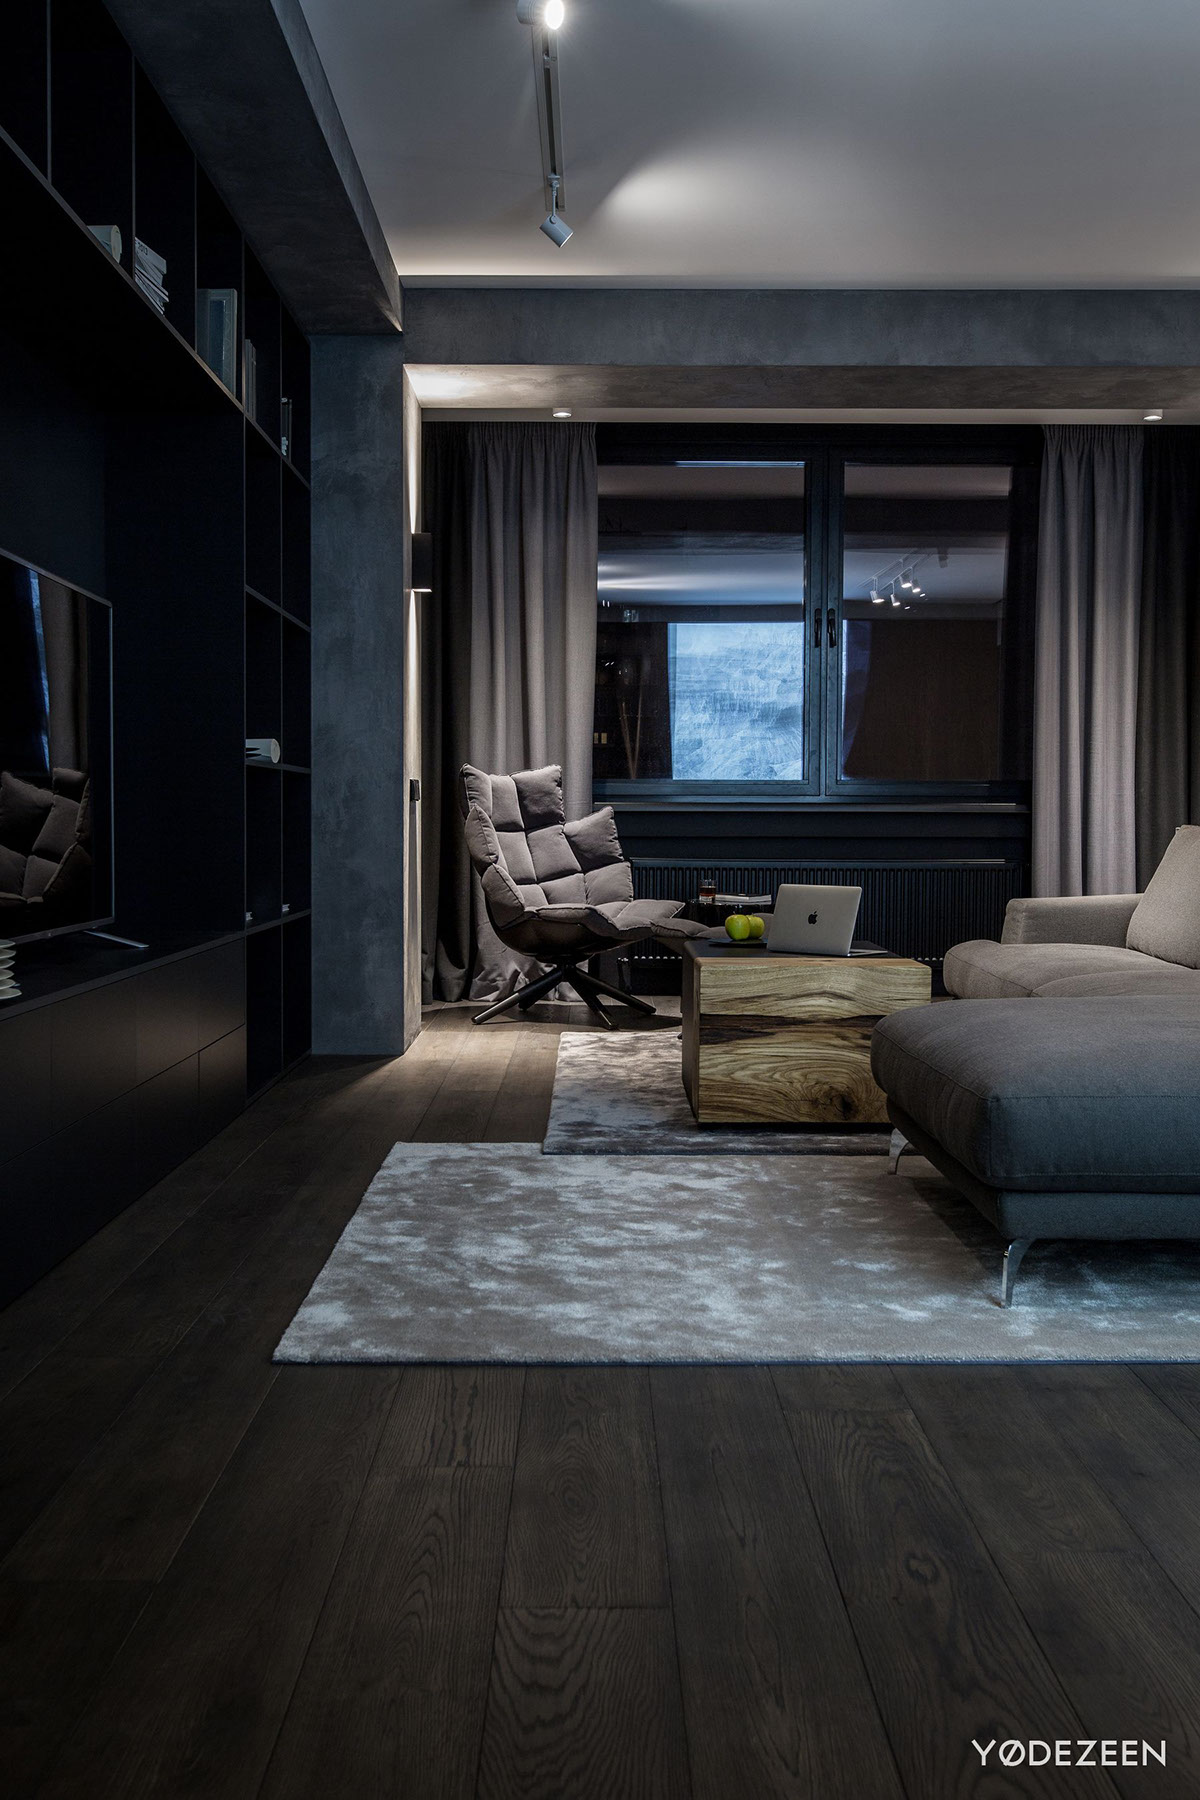 Interior design minimalistic shadesofgrey myhouseidea Flos poliform vibia HomeDecorating apartment privateresidence